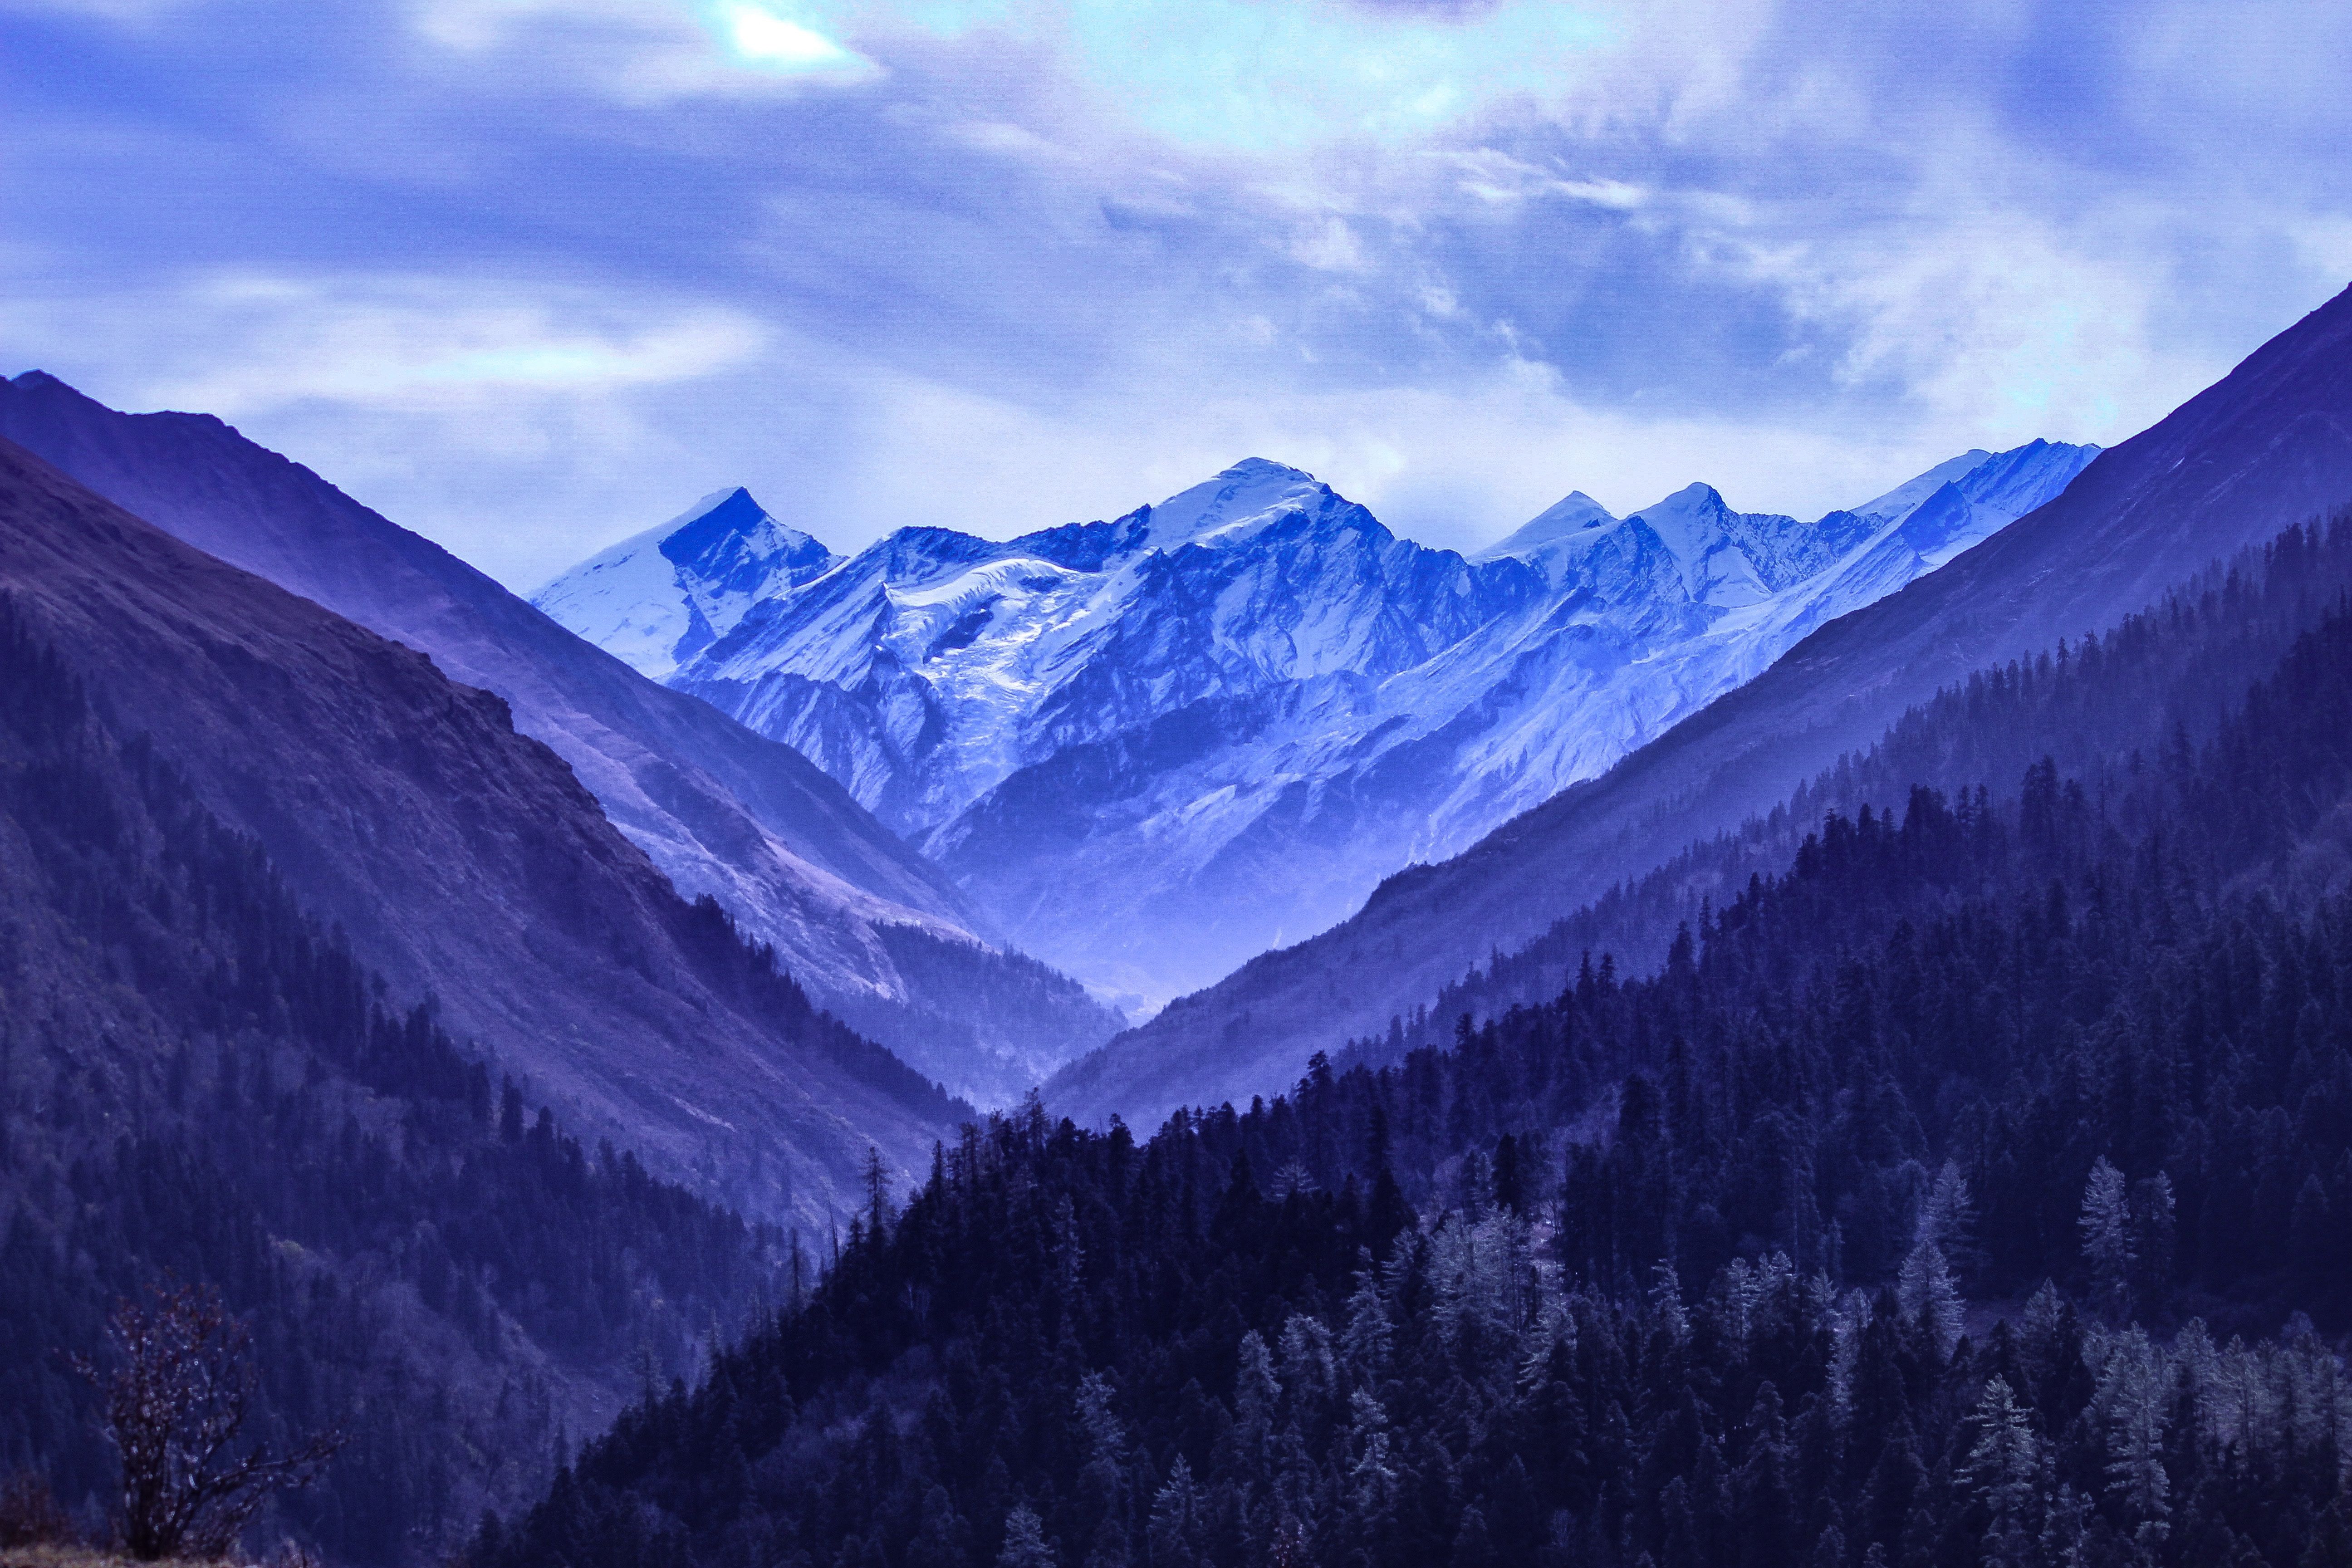  5k Hintergrundbild 5184x3456. Mountain Range Blue 5k, HD Nature, 4k Wallpaper, Image, Background, Photo and Picture